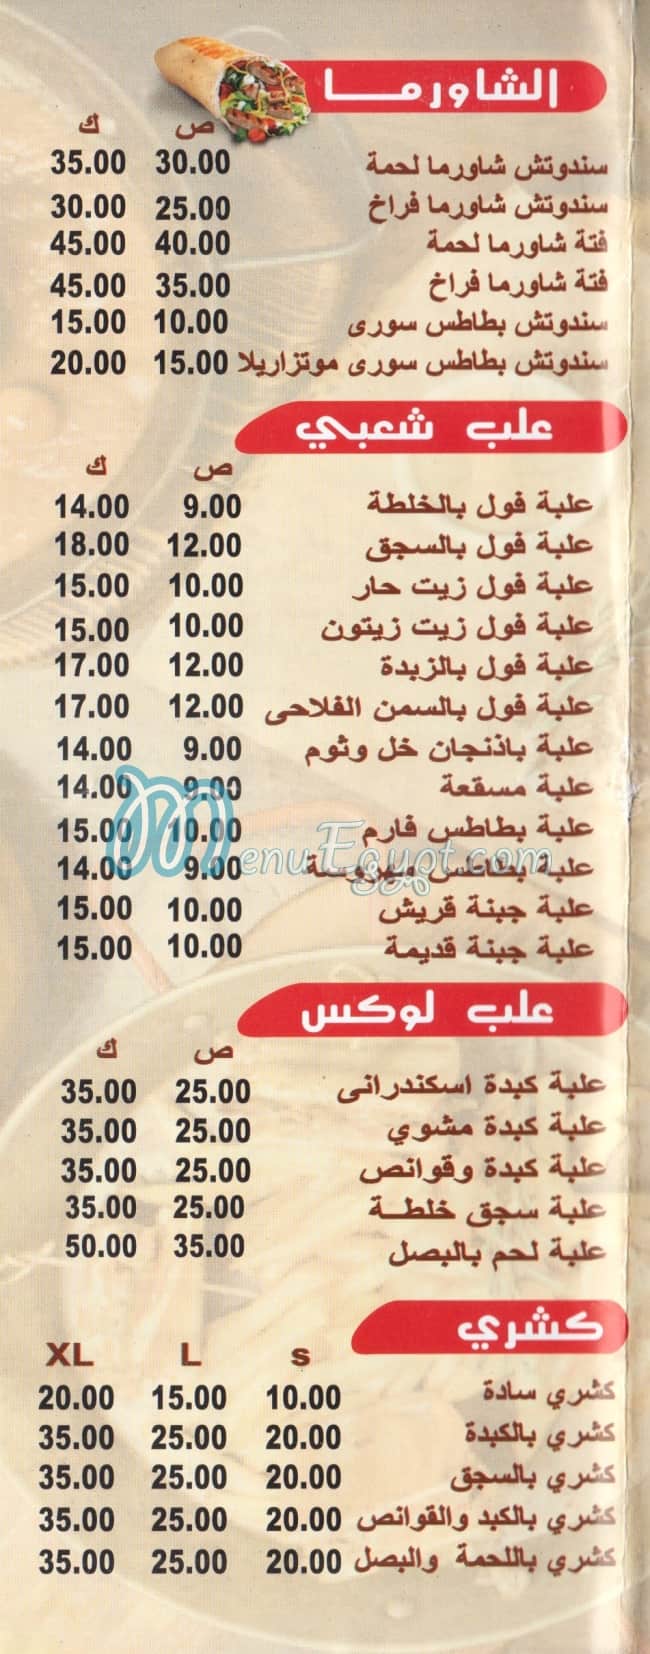 Mohamed Ahmed Alex menu prices